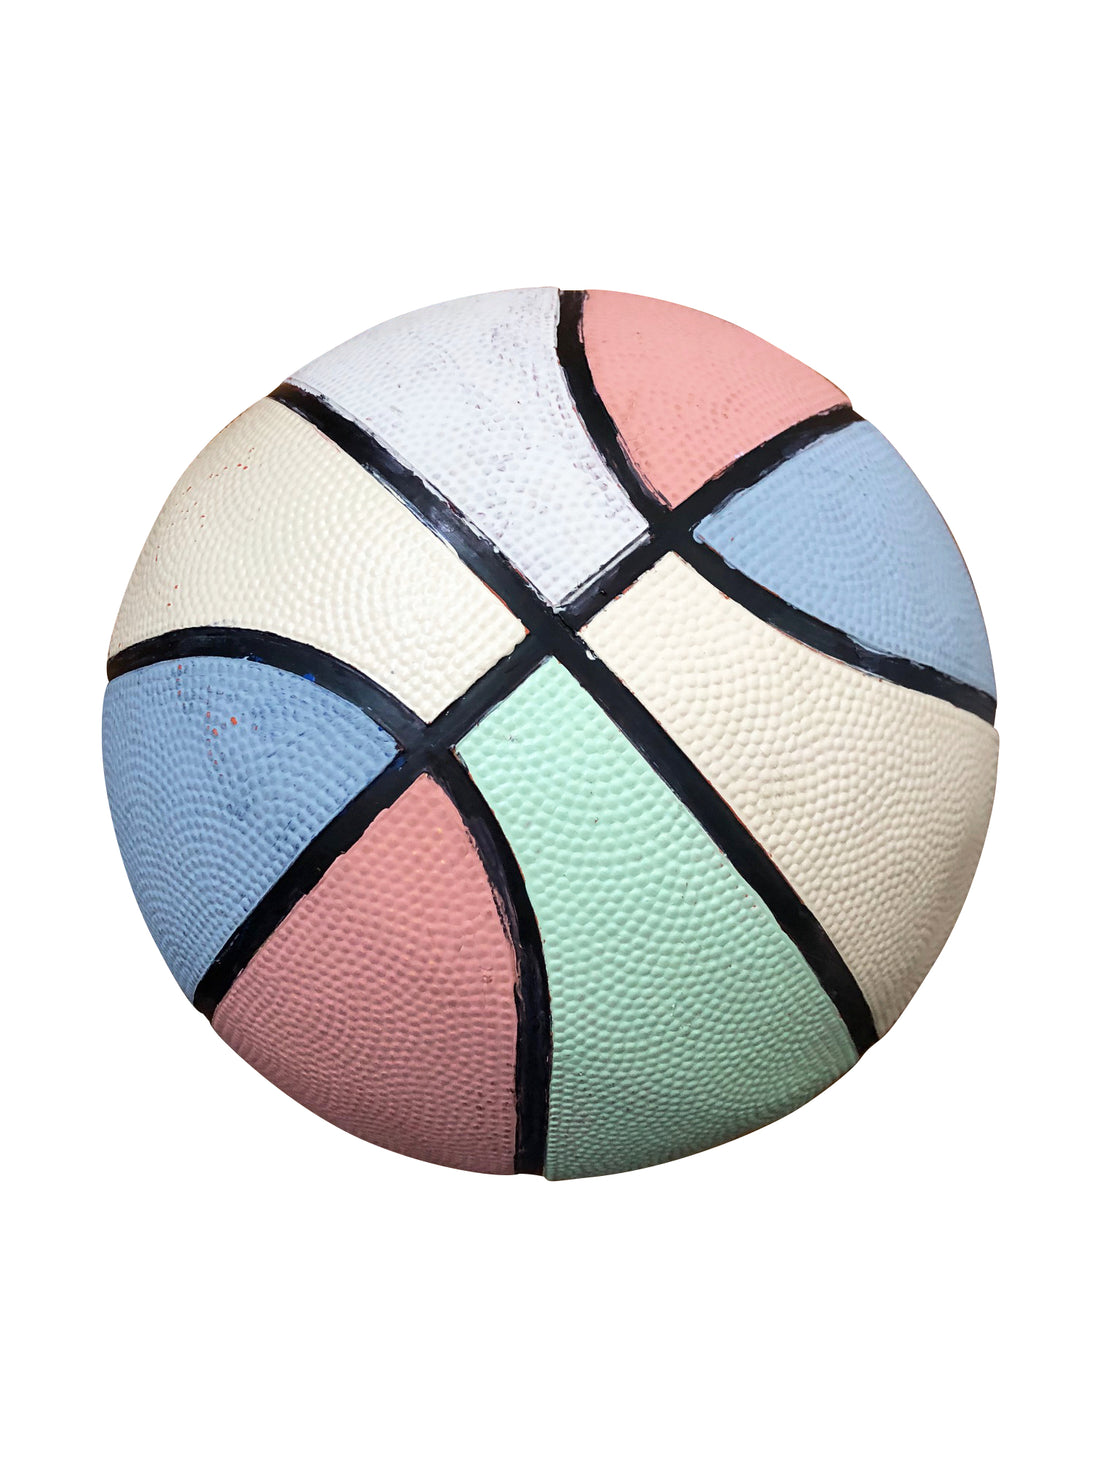 Colourful Basketball